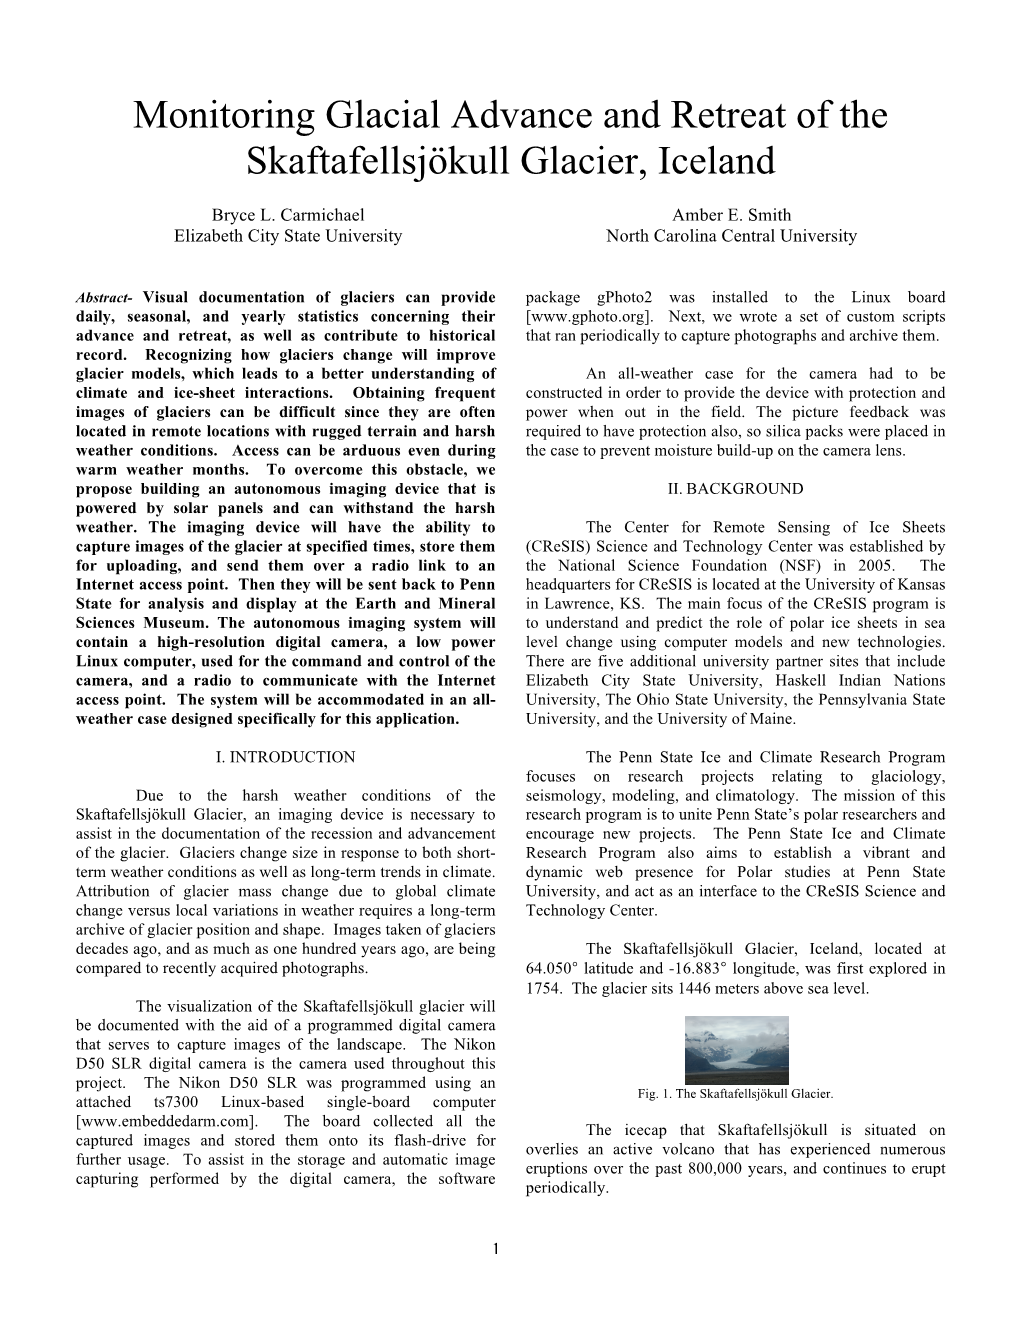 Monitoring Glacial Advance and Retreat of the Skaftafellsjökull Glacier, Iceland